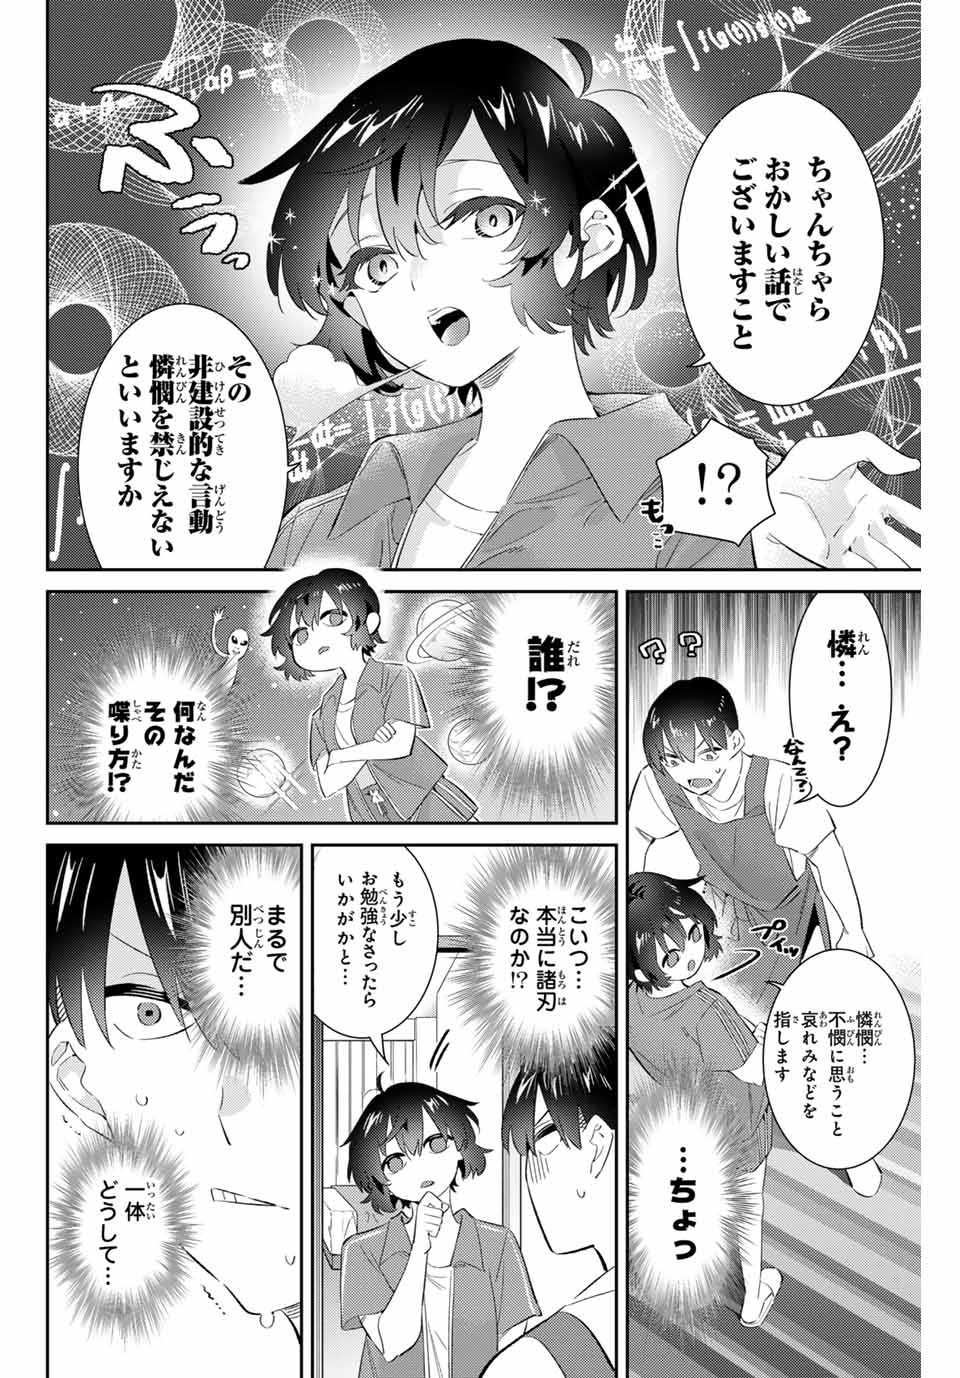 Gorin No Megami-sama: Nadeshiko Ryou No Medal Gohan - Chapter 64 - Page 2